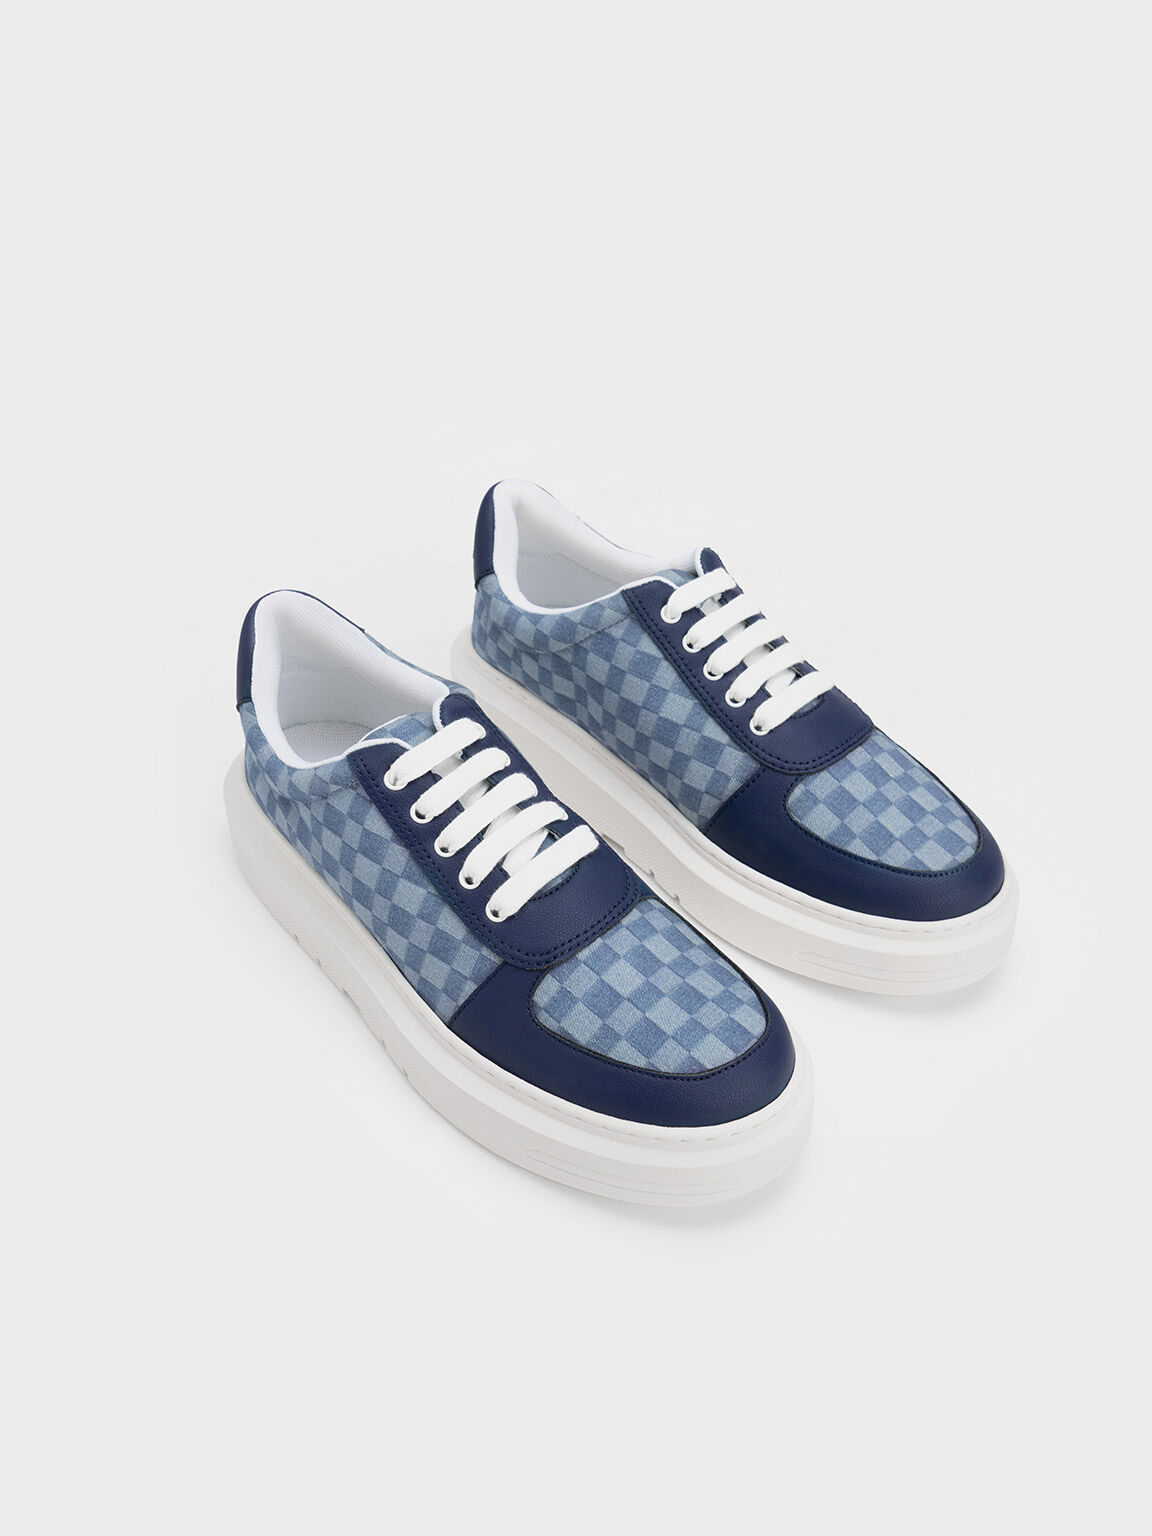 Stevie Denim Checkered Sneakers, Blue, hi-res